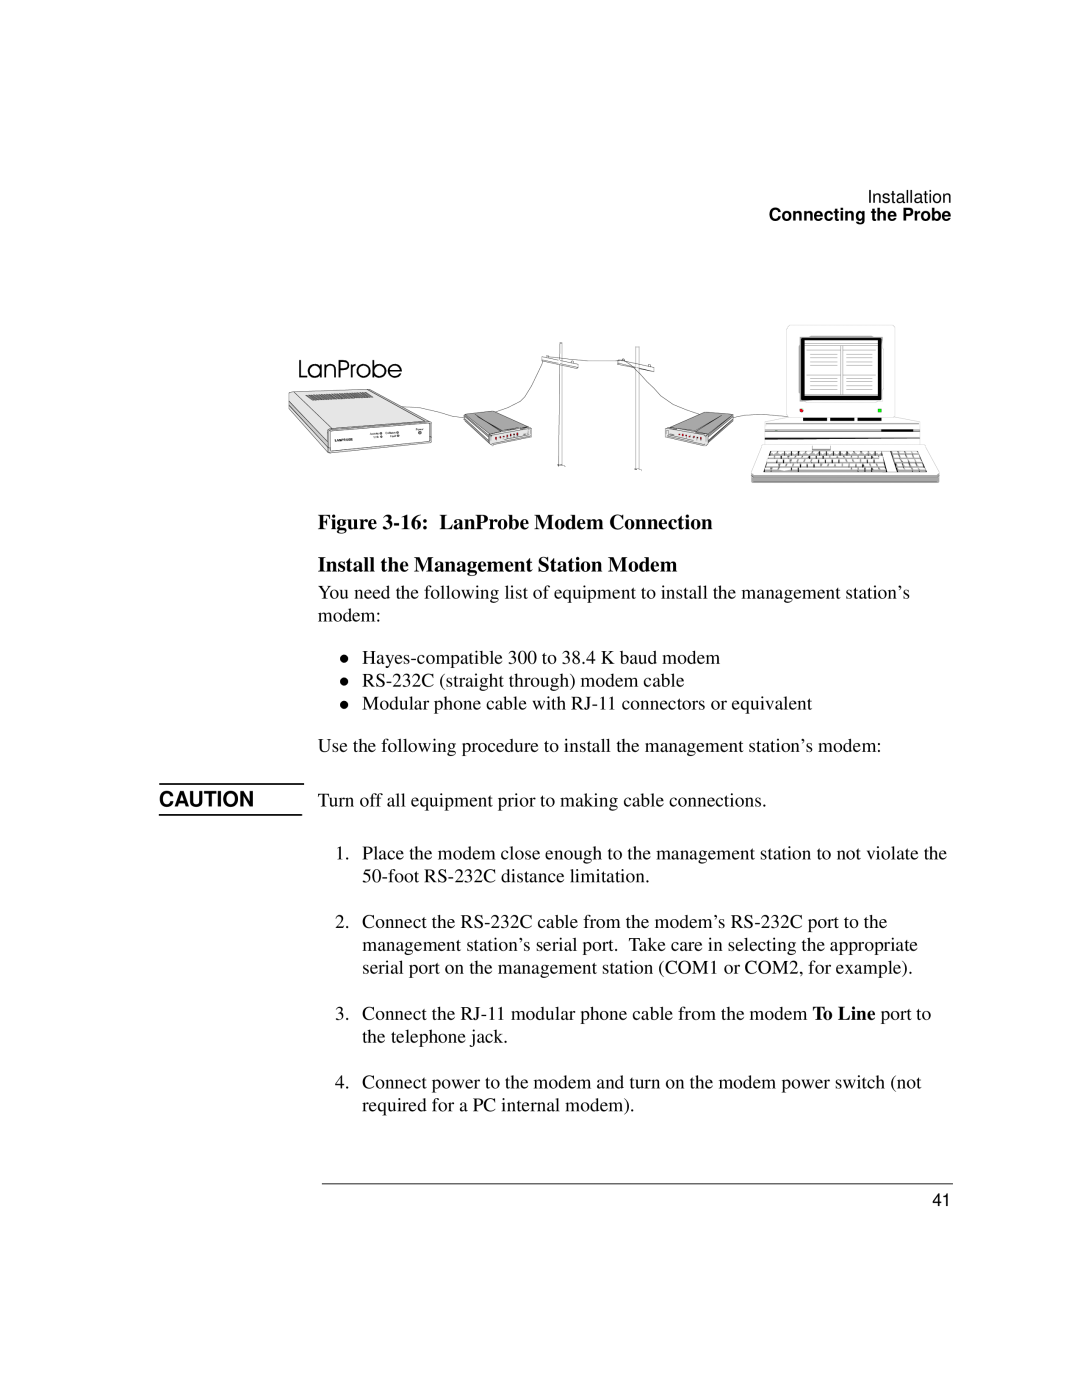 IBM 4986B LanProbe manual 16 LanProbe Modem Connection, Install the Management Station Modem 